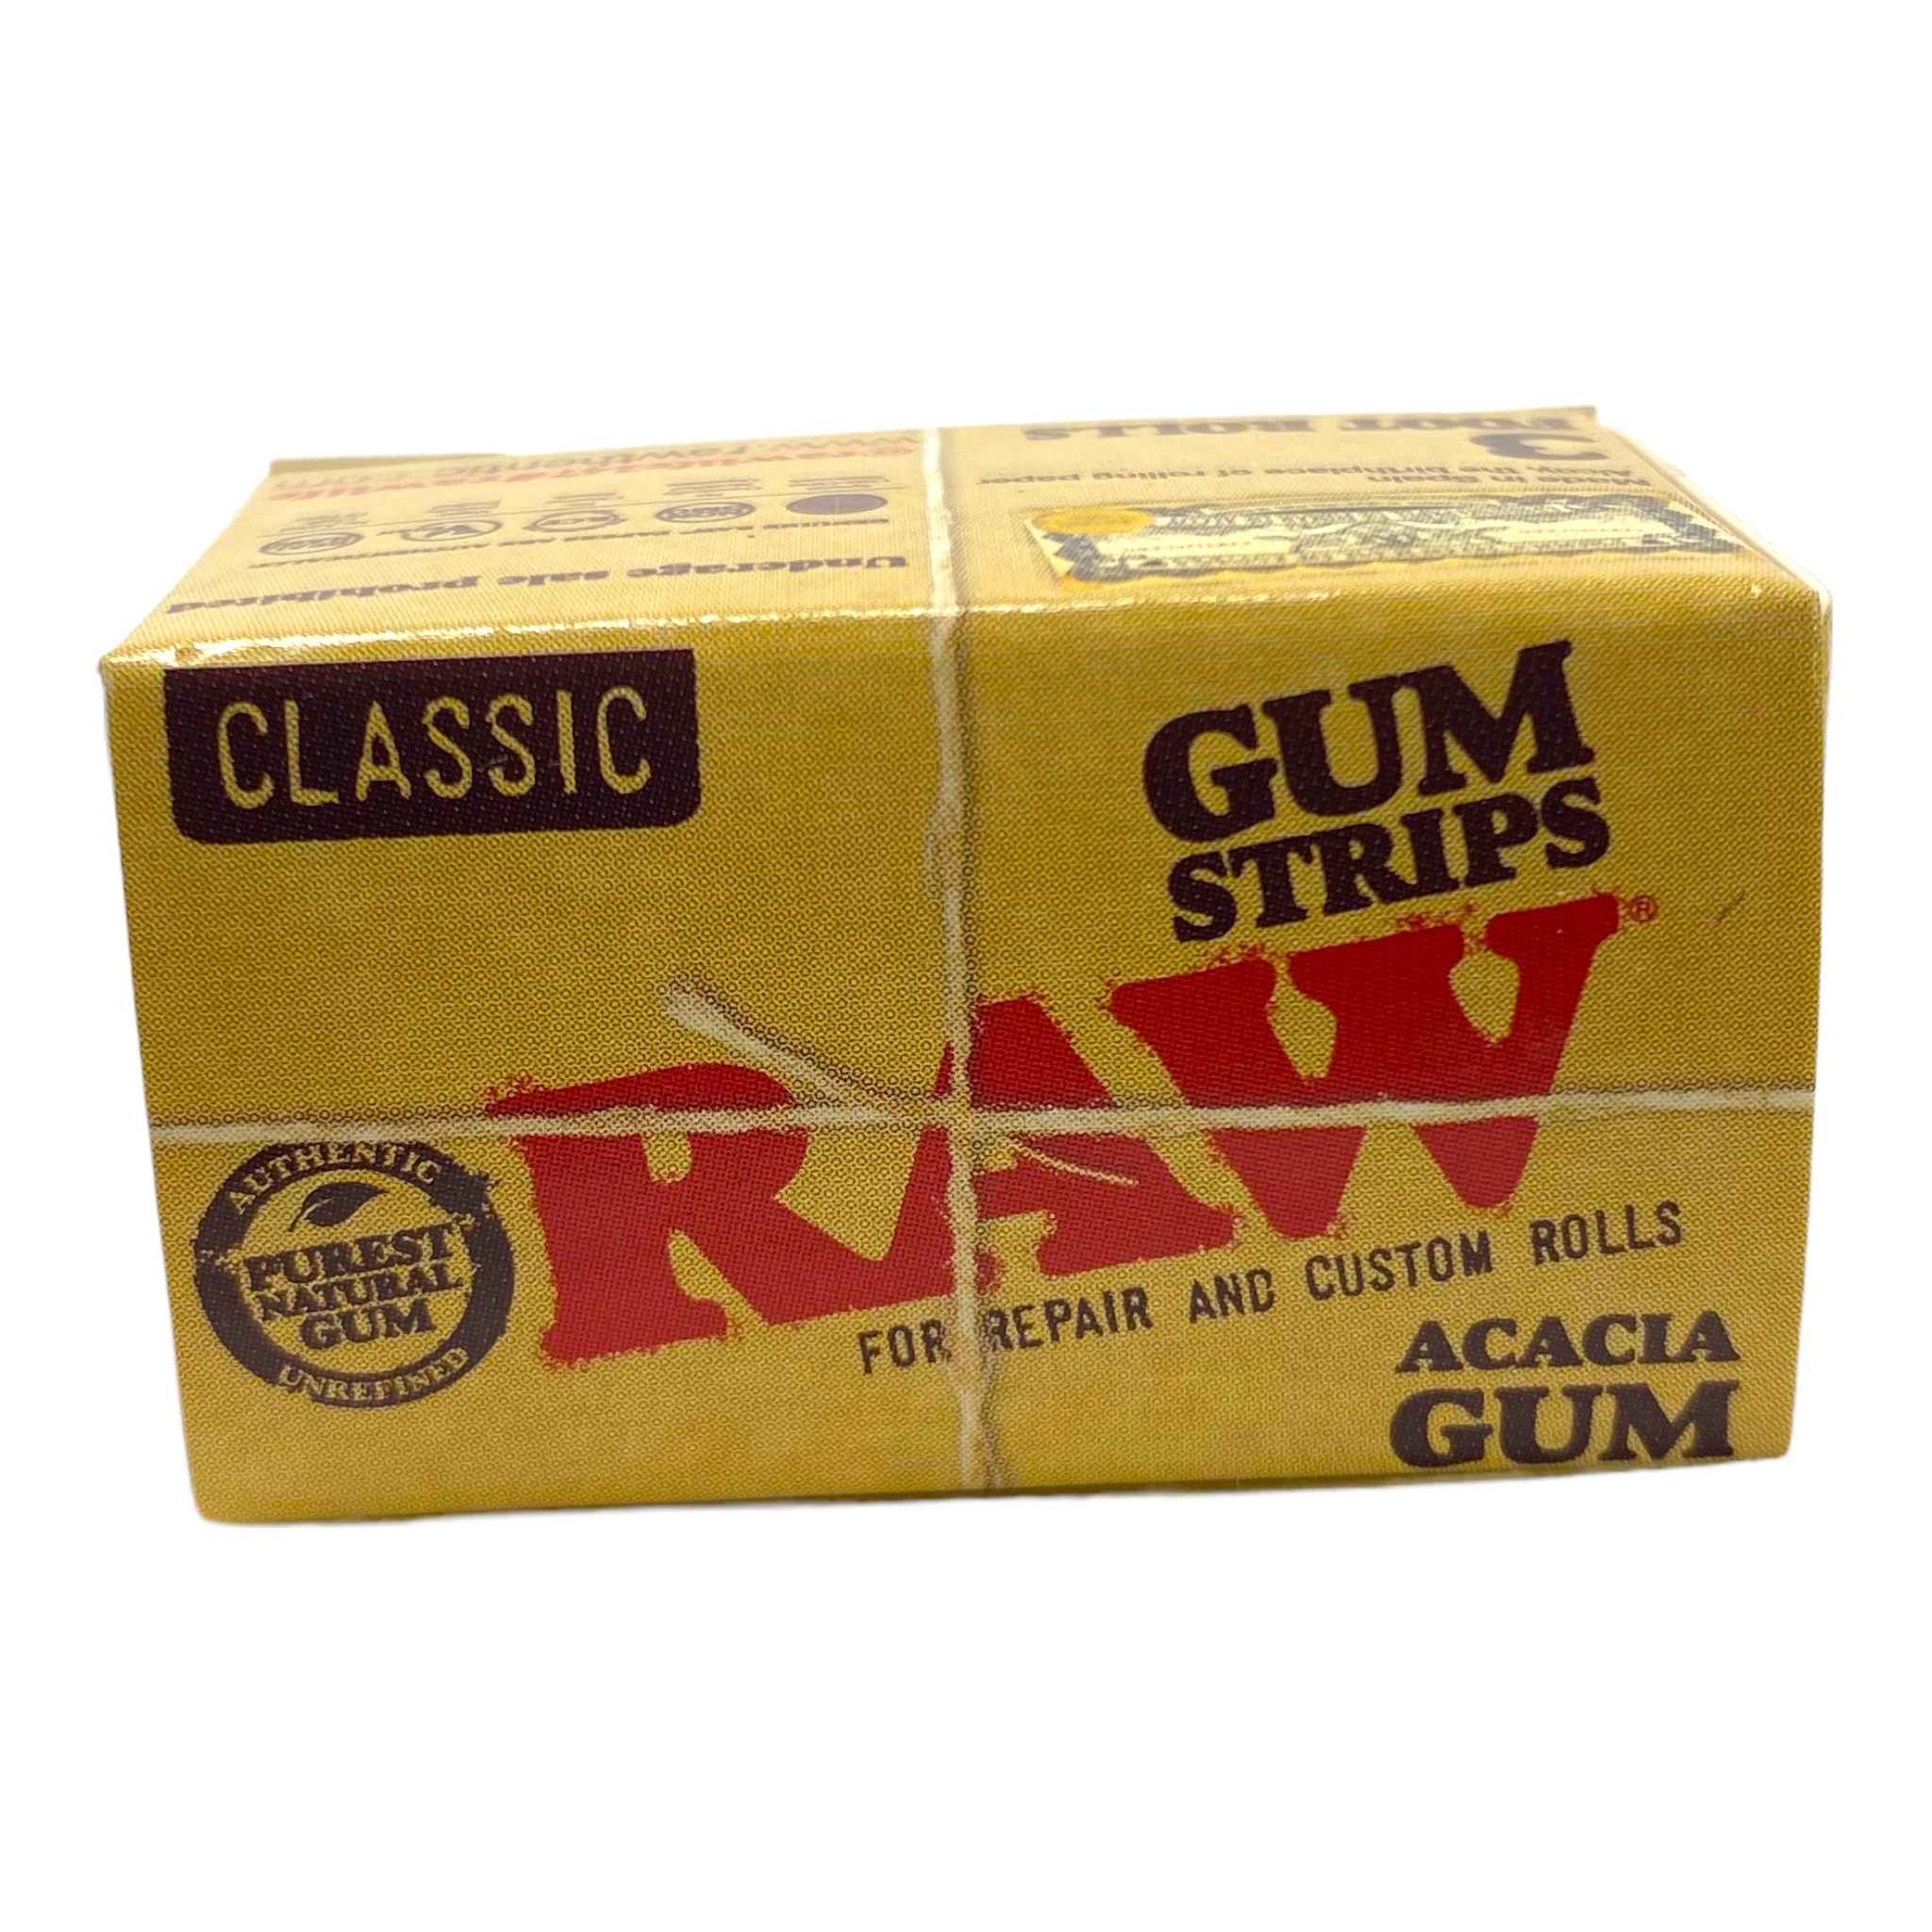 Raw Gum Strips